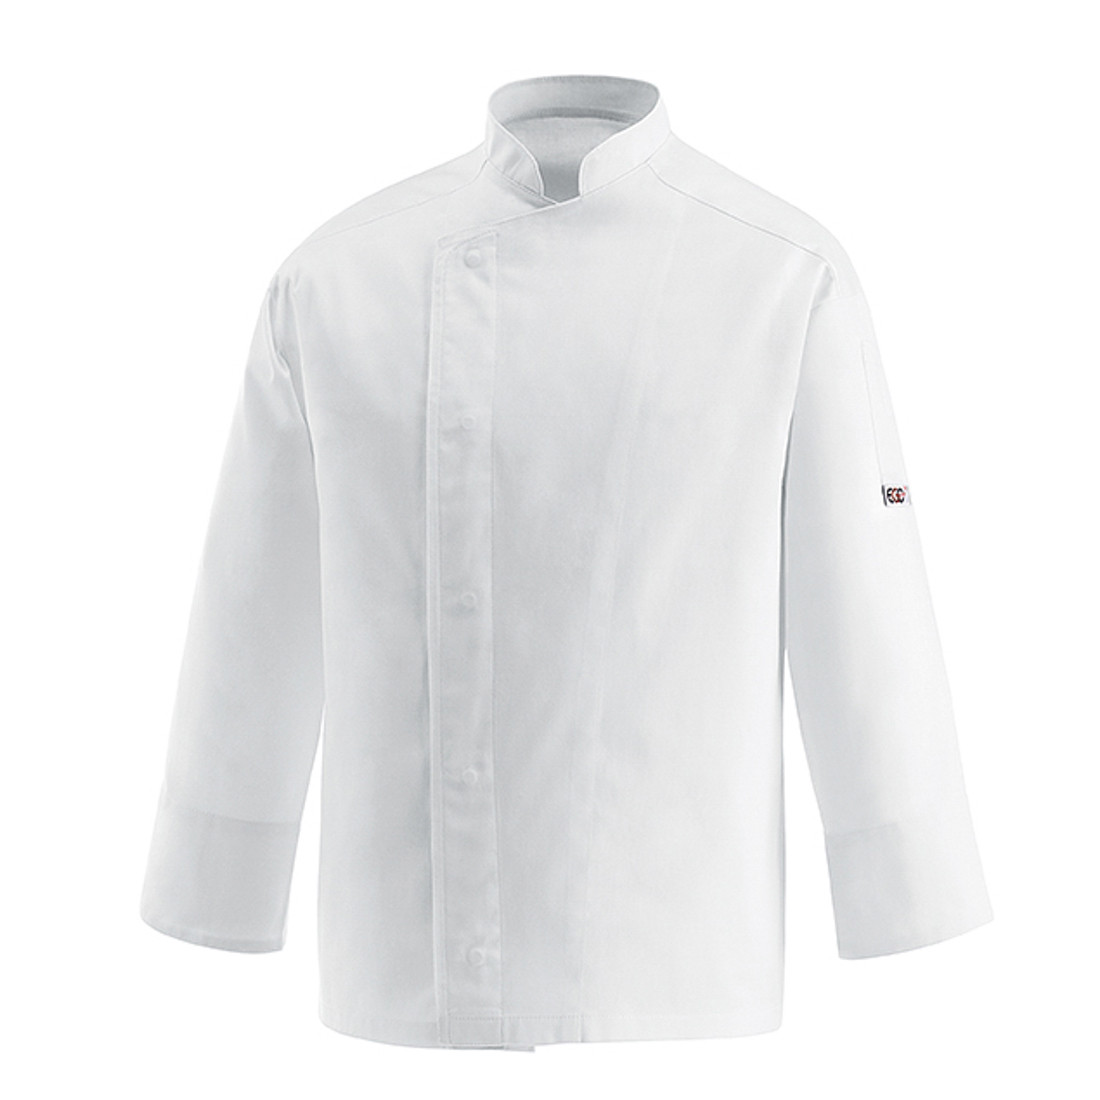 All Chef's Jacket, 100% cotton - Safetywear